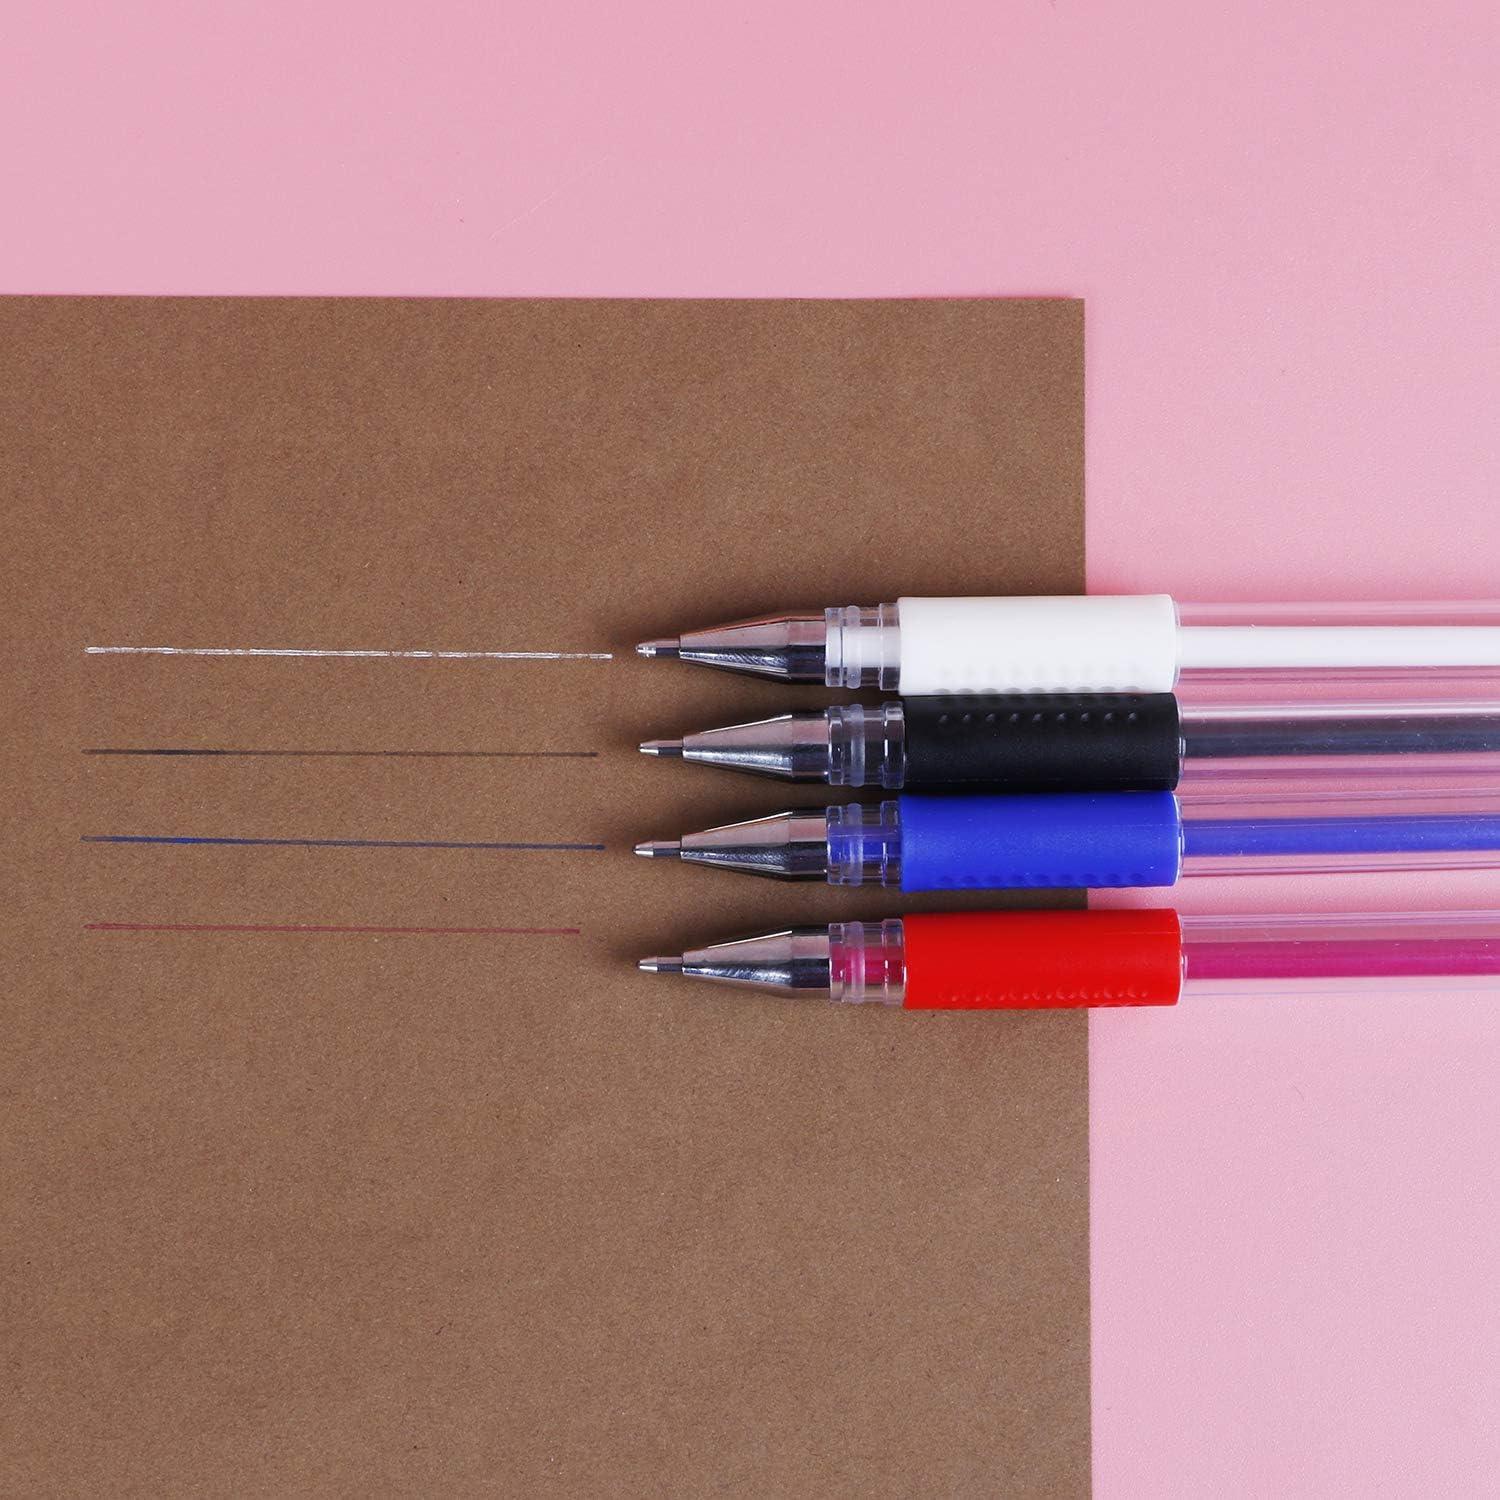 Heat Erasable Pens 4 Pieces Fabric Marking Pens with 20 Refills